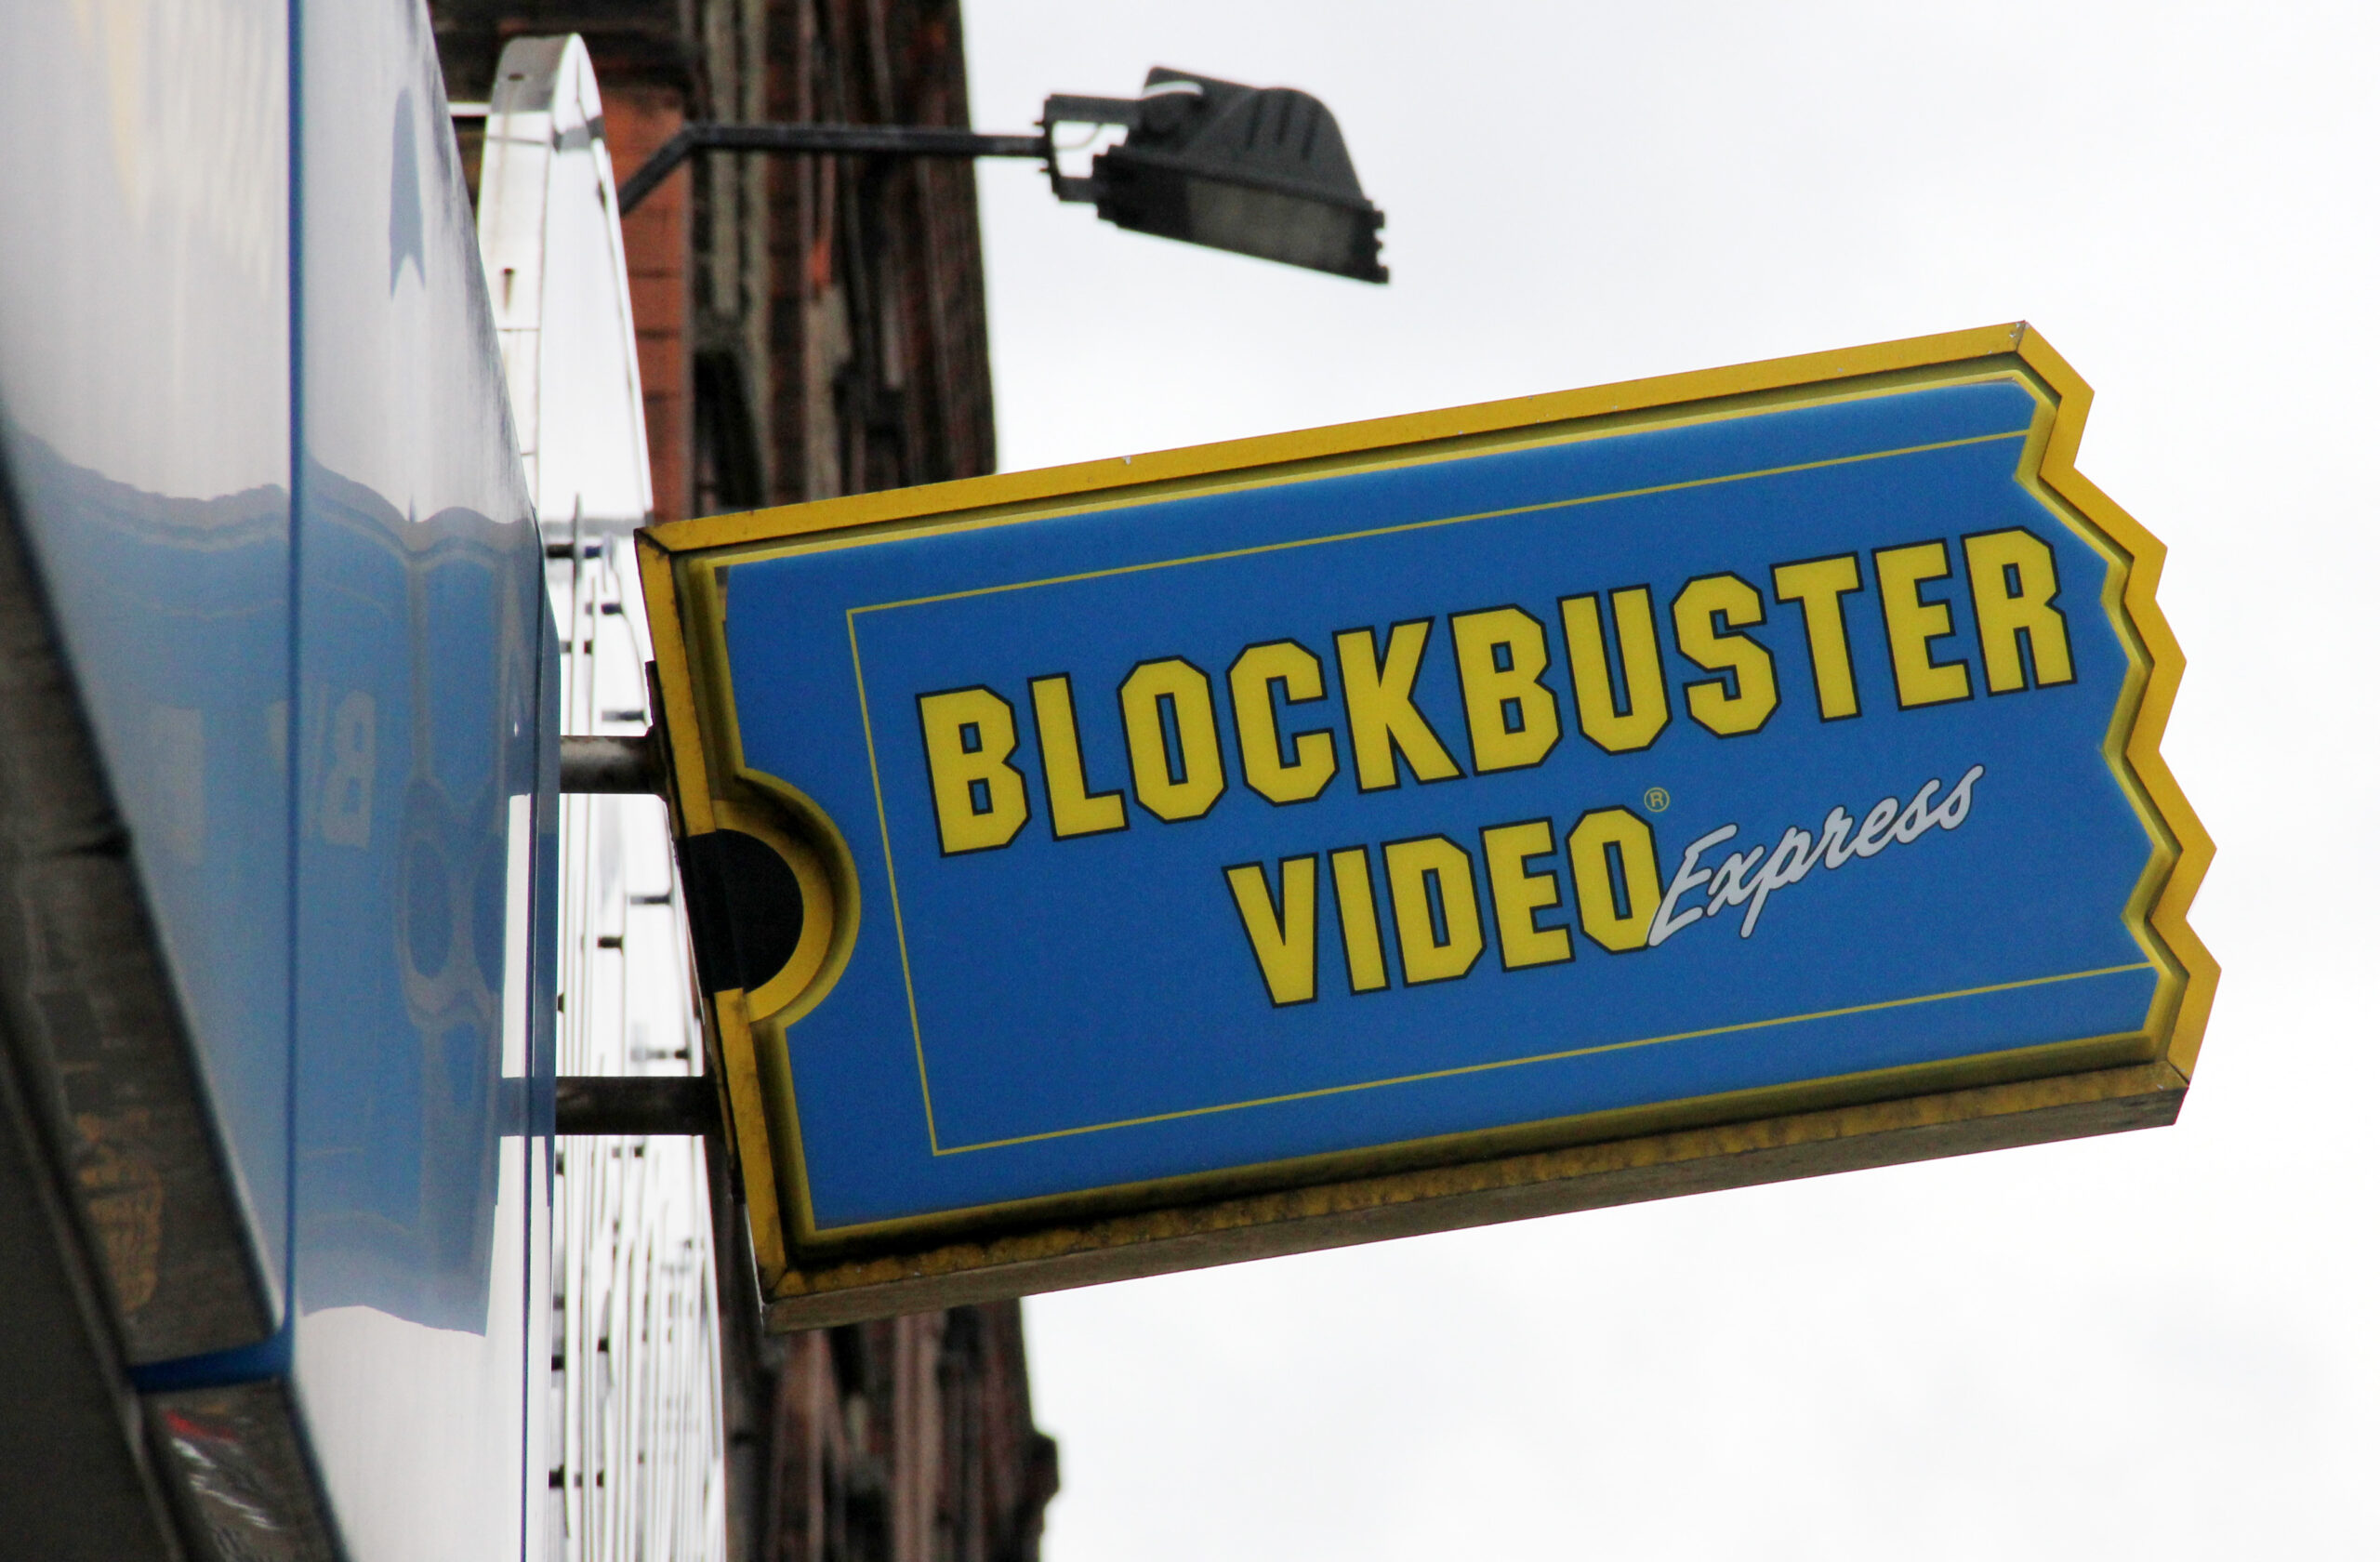 Blockbuster Video rental store sign, London, England, Britain